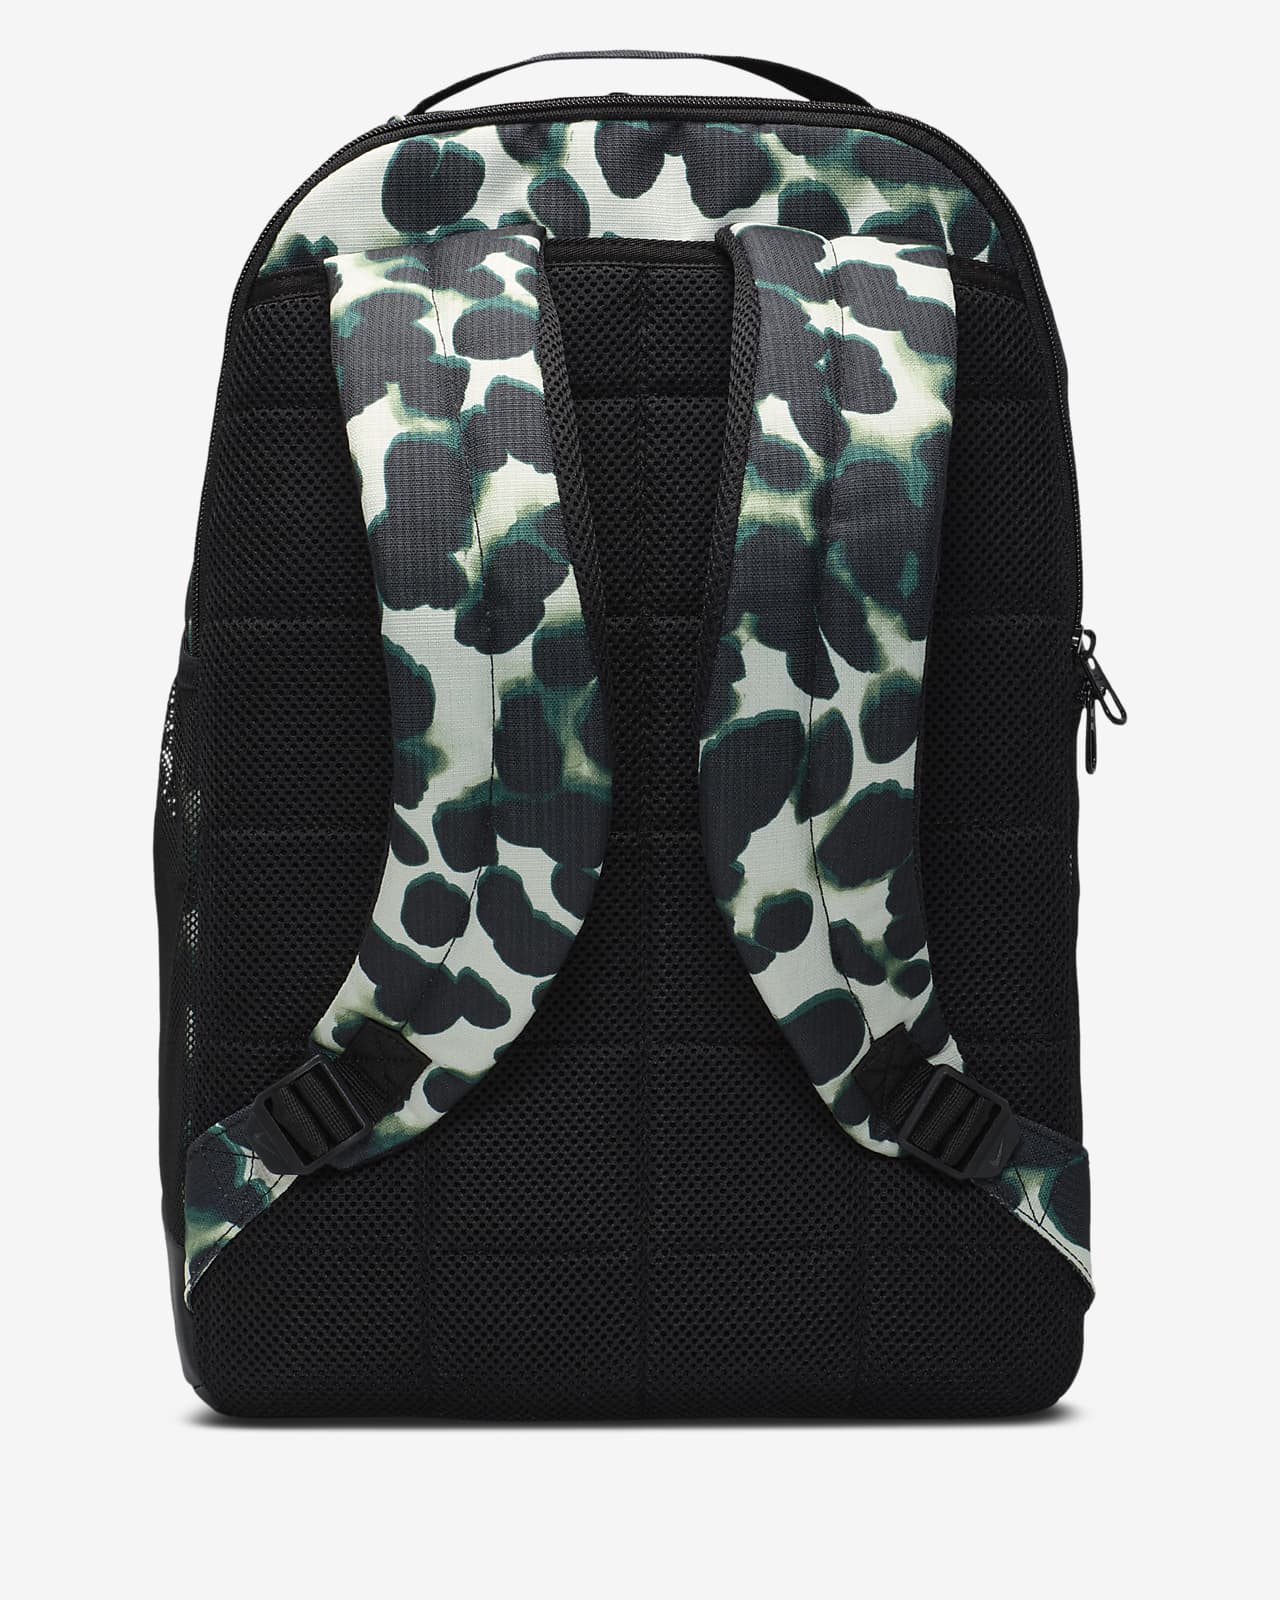 Nike Brasilia Backpack [#BA5954], Hi Visibility Jackets, Dickies, Ogio  Bags, Suits